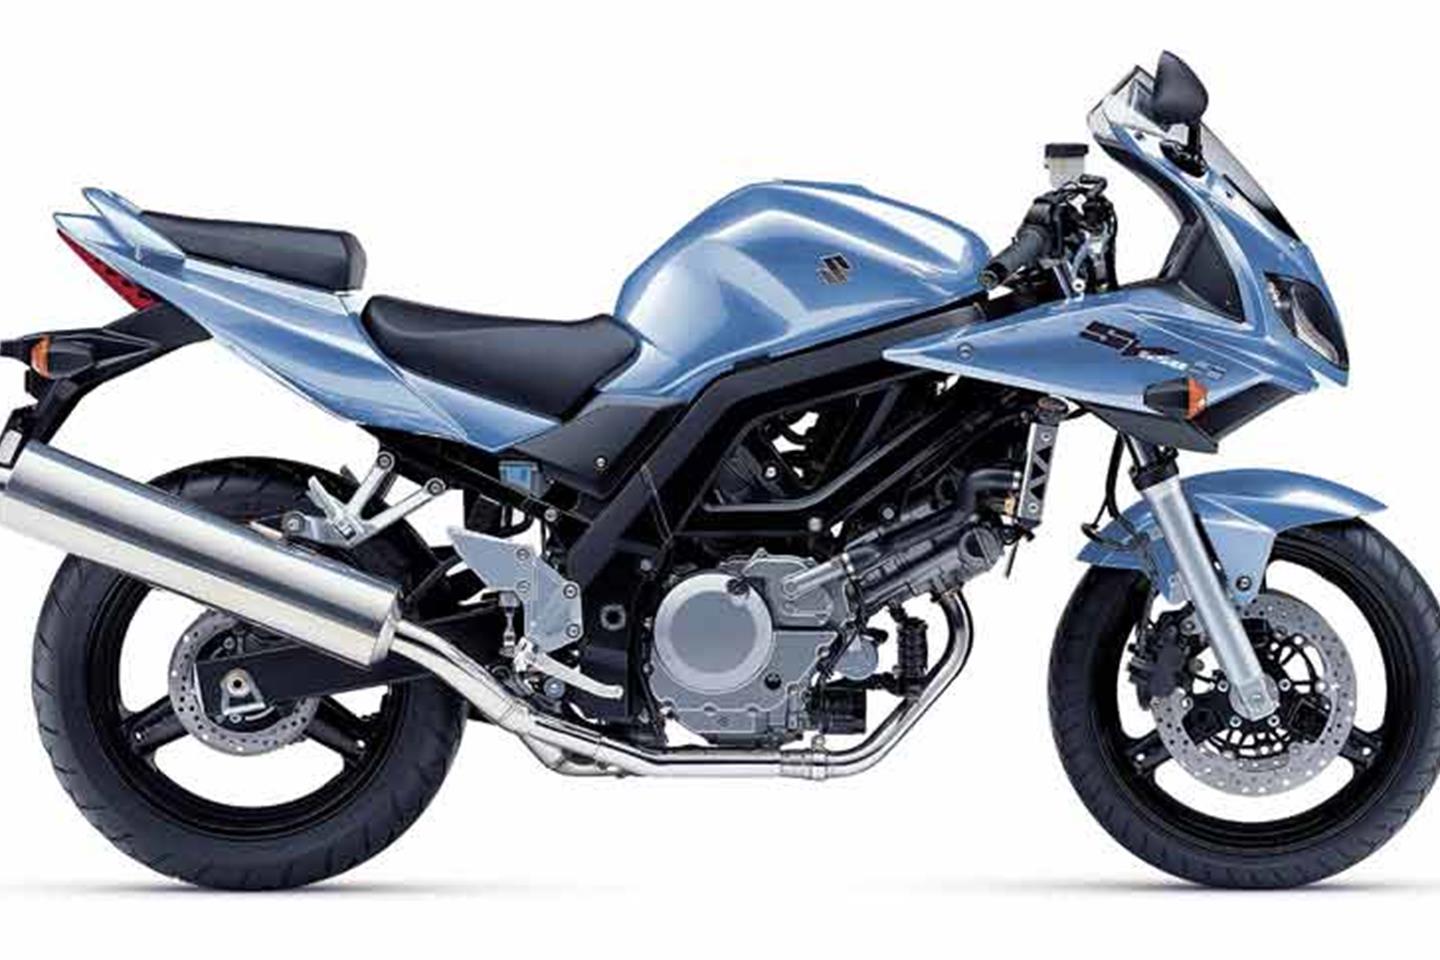 Windscreen And Jump Of Wind BIHR for Suzuki Motorcycle 650 SV 1999-2002 New 